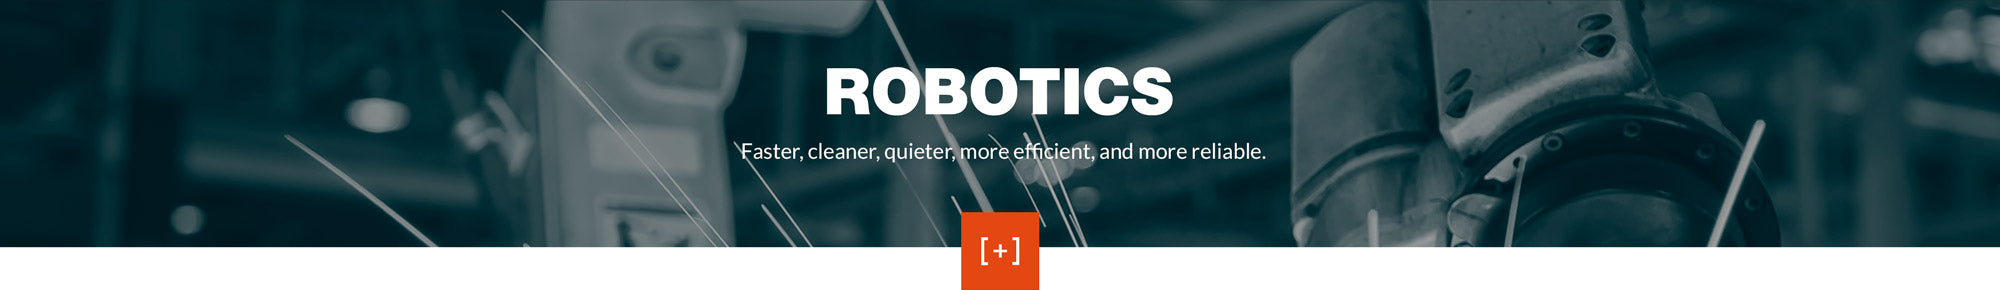 robotics banner